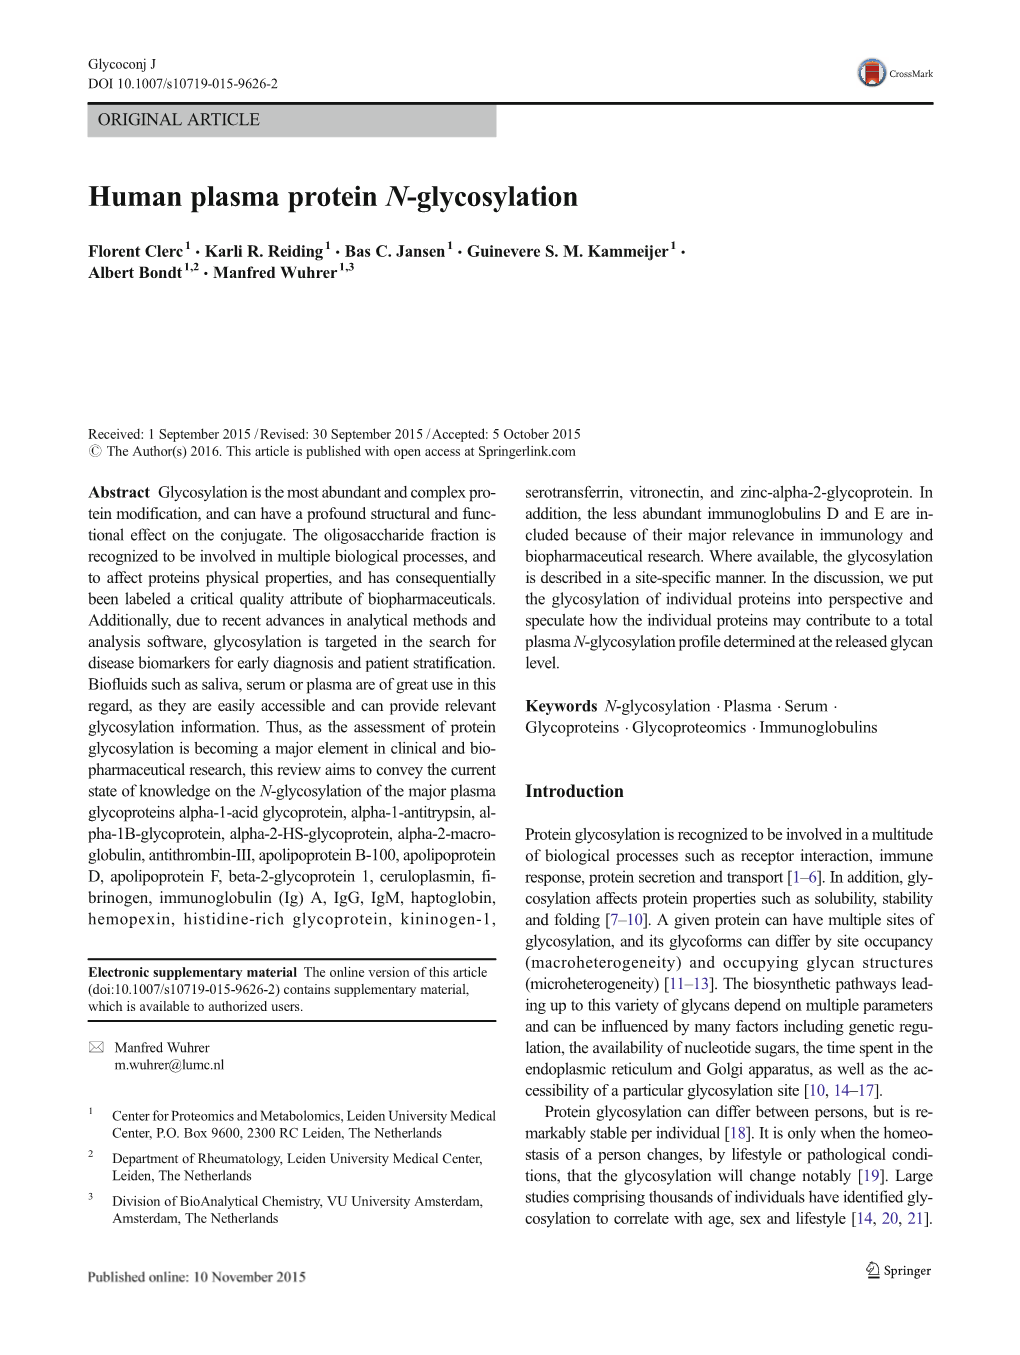 Human Plasma Protein N-Glycosylation